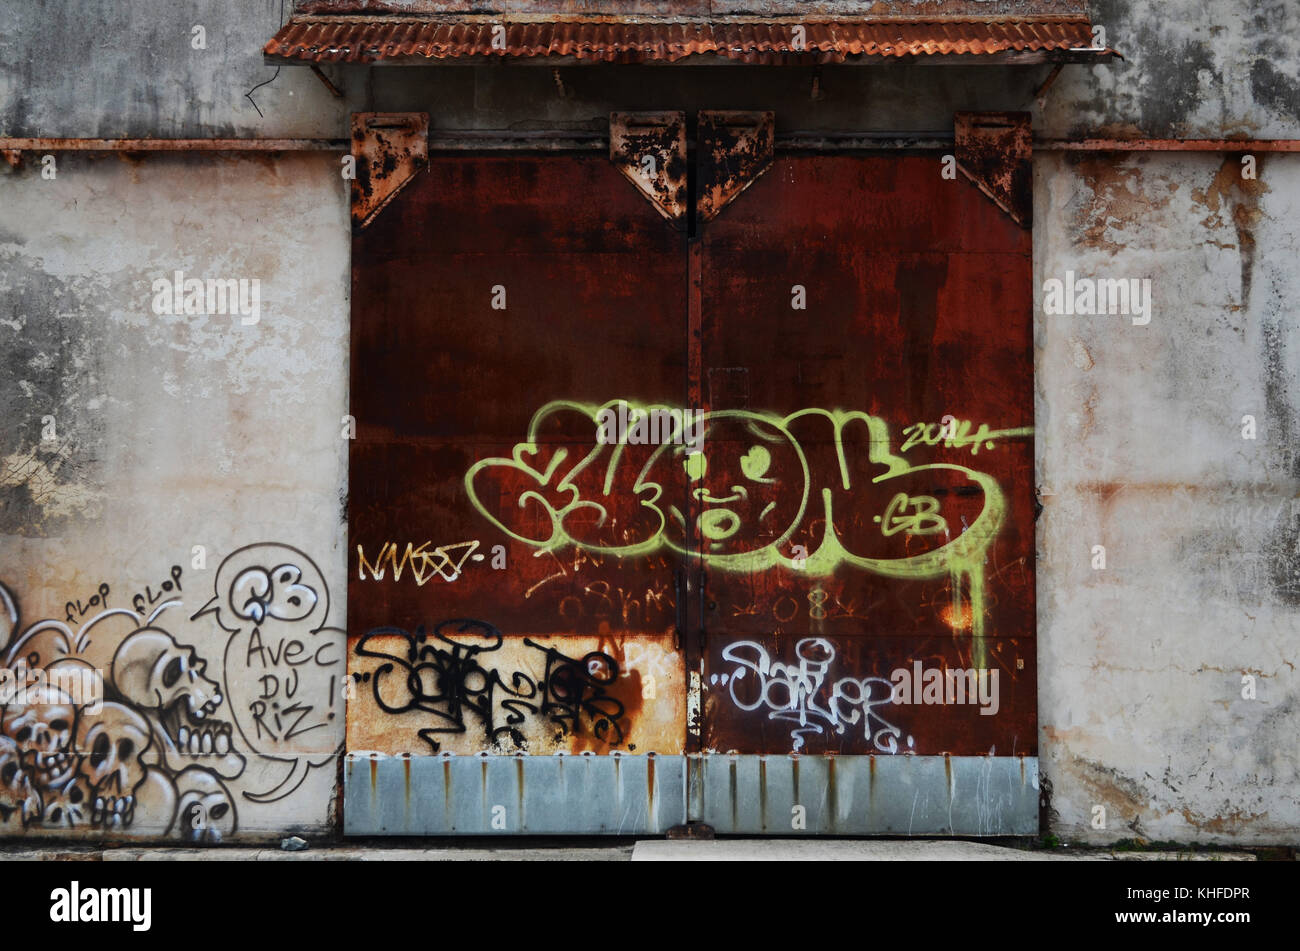 Graffiti on metal doors taken in Noumea New Caledonia Stock Photo